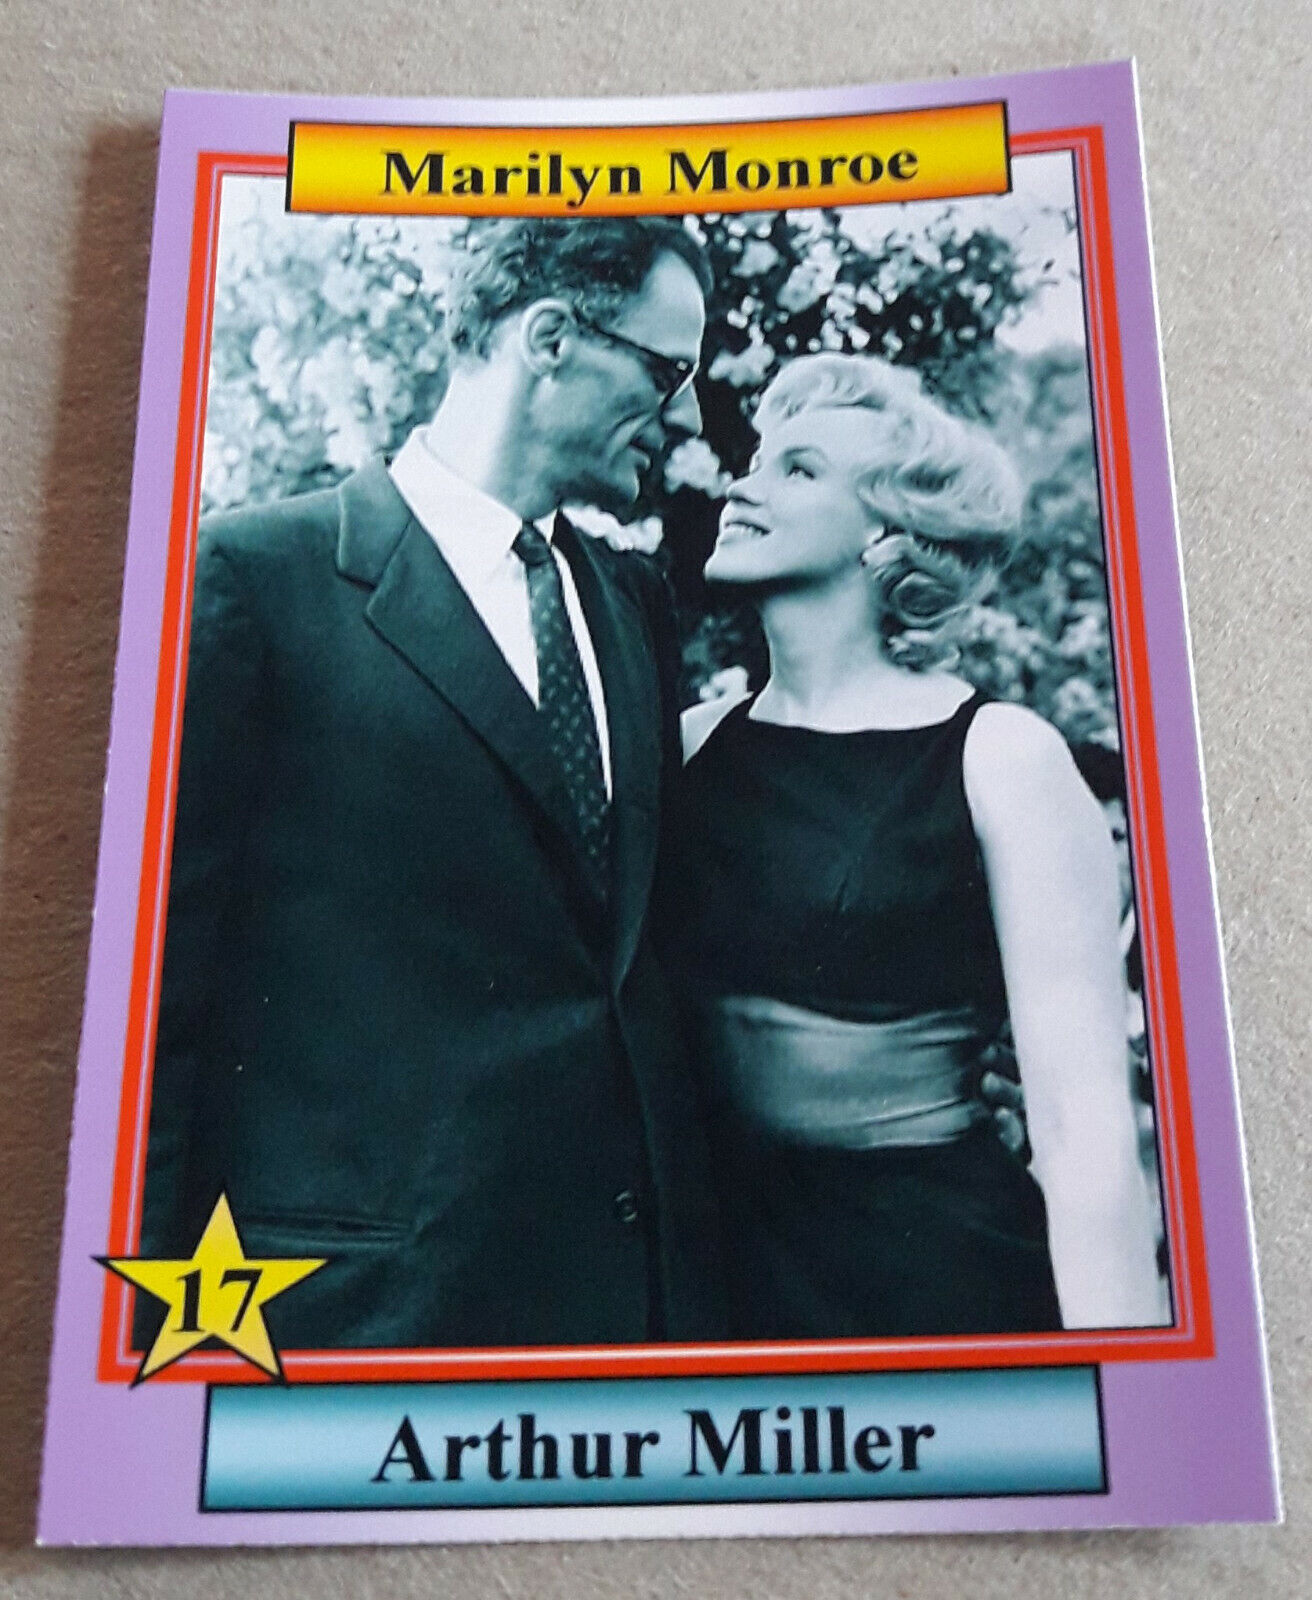 Aktorka MARILYN MONROE z ARTHUR MILLER - Sammelbild / Trading Card #430